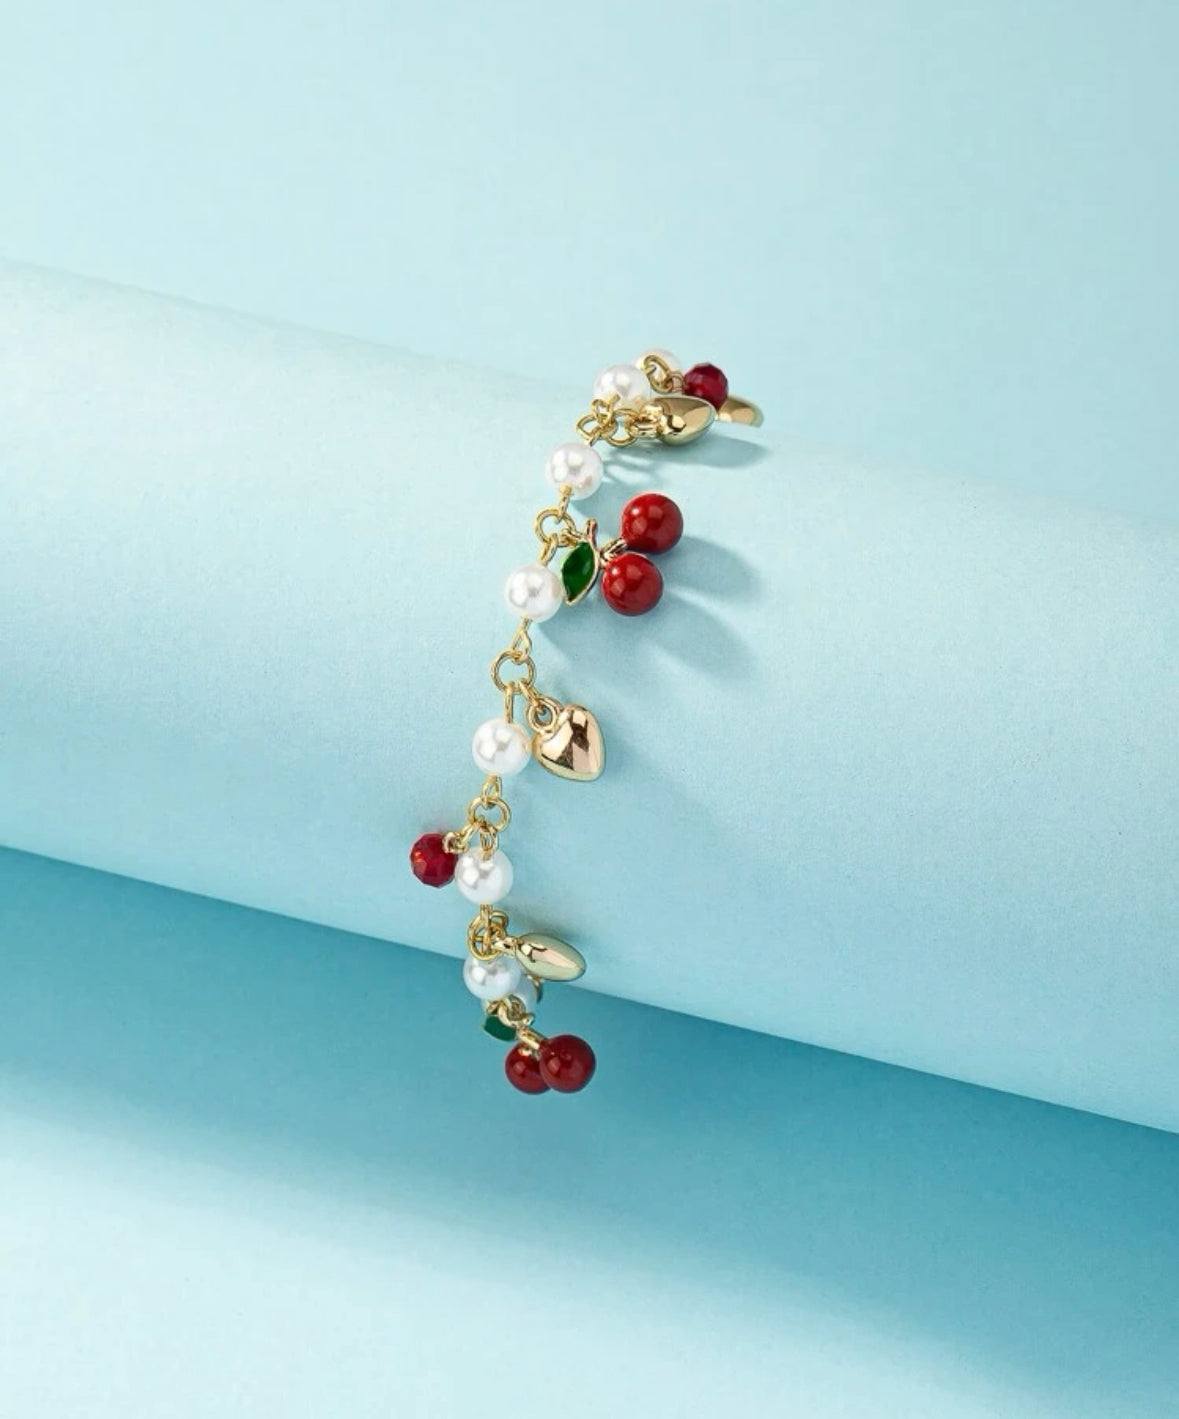 Cherry Blossom Charm Bracelet.